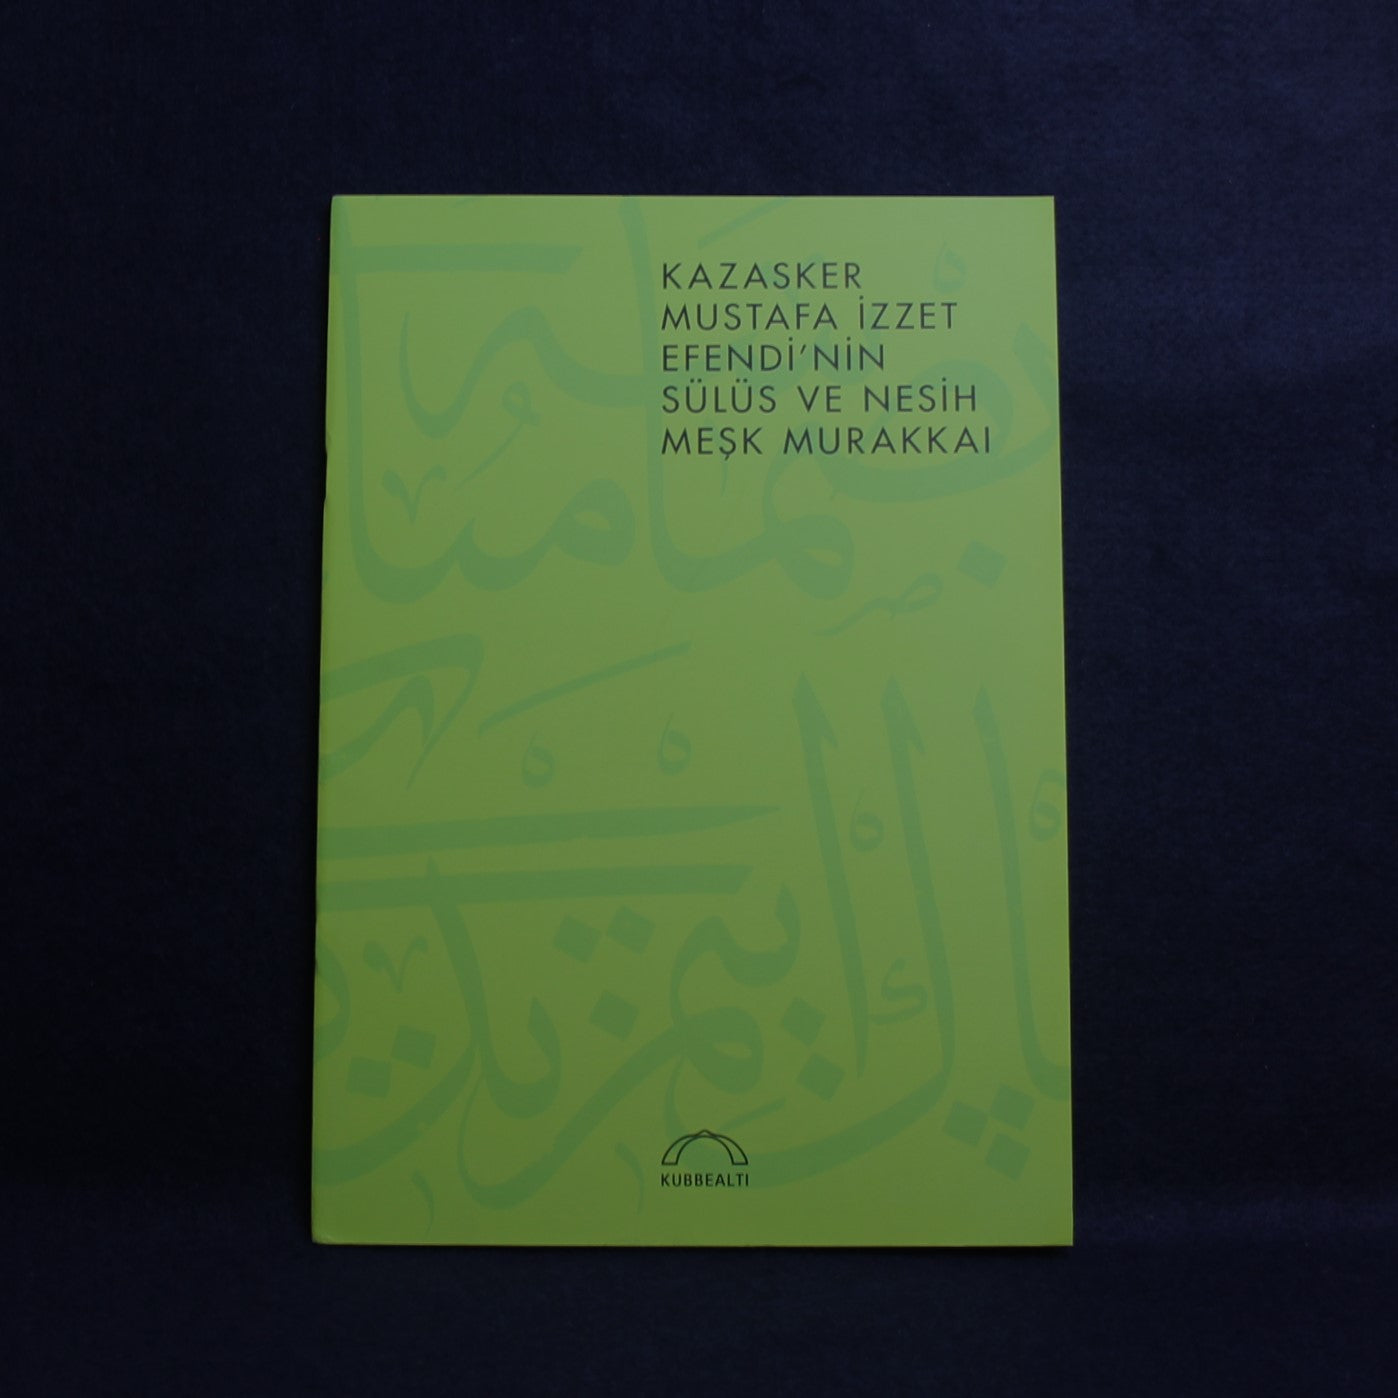 Model book (mashq) for Thuluth and Naskh scripts - based on work of Mustafa Izzet Efendi